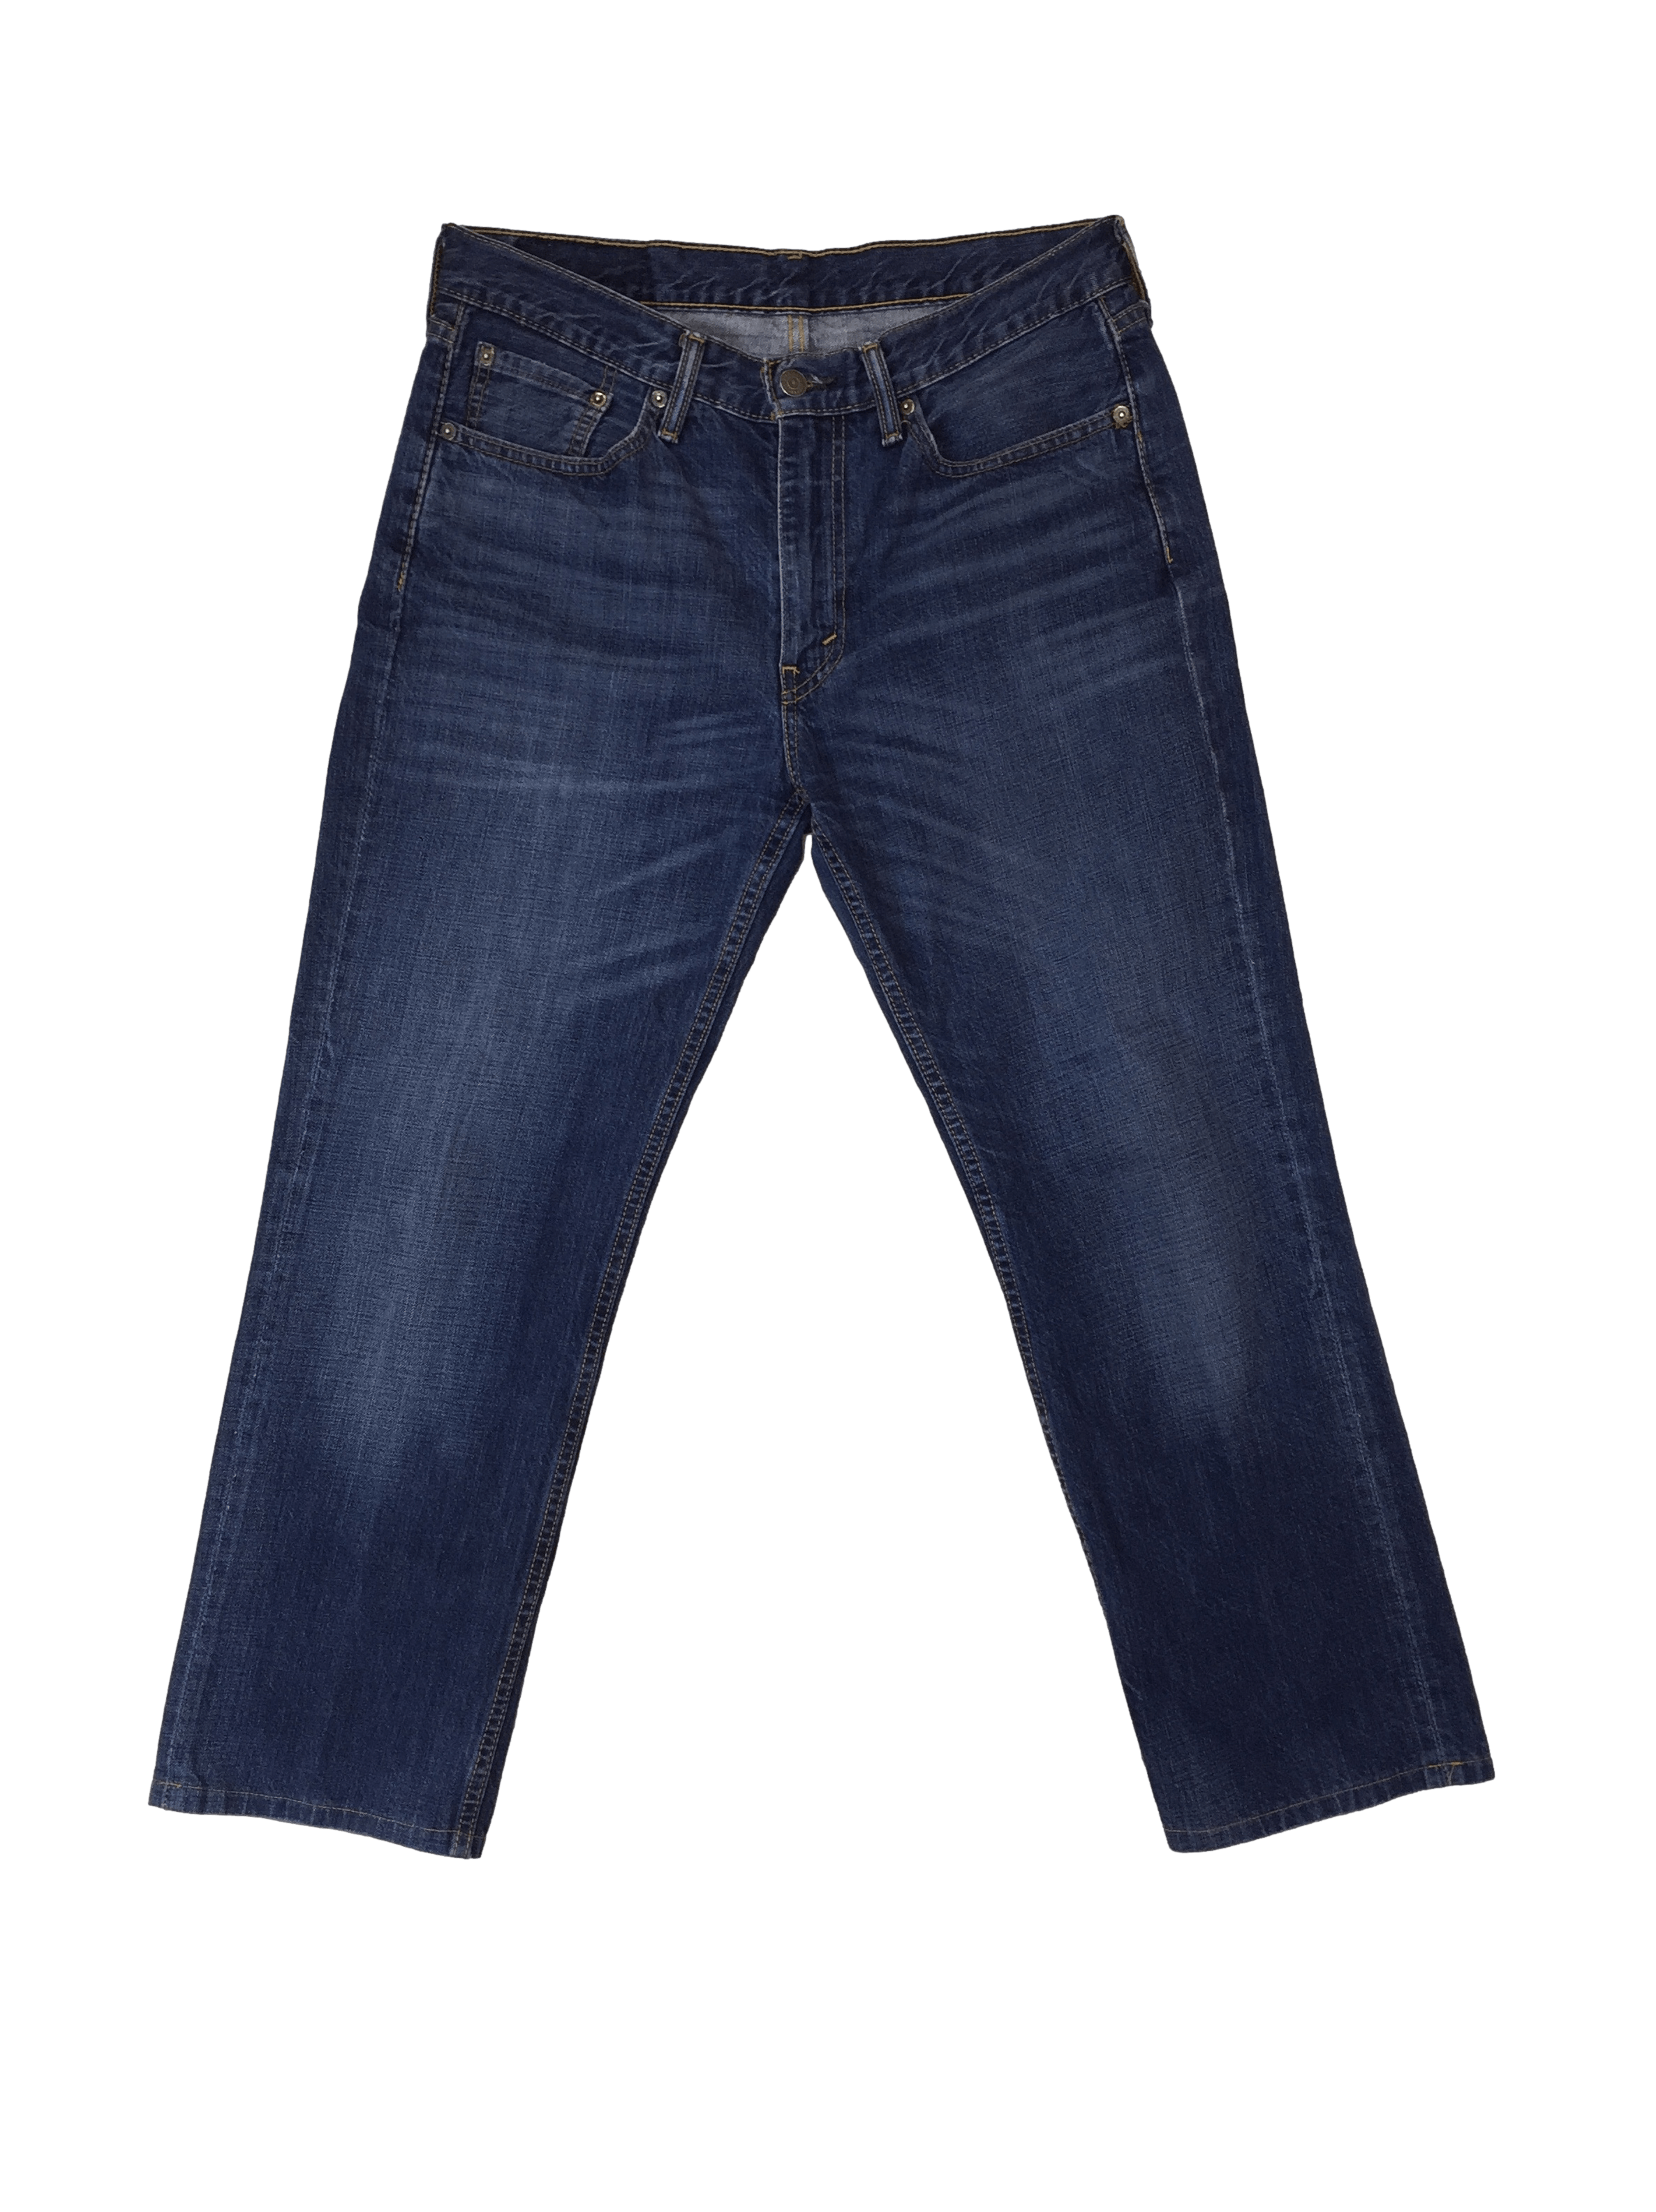 Pantalón jean clásico Levi's modelo five pocket. Cintura 84 cm, Tiro 29 cm, Largo 95 cm